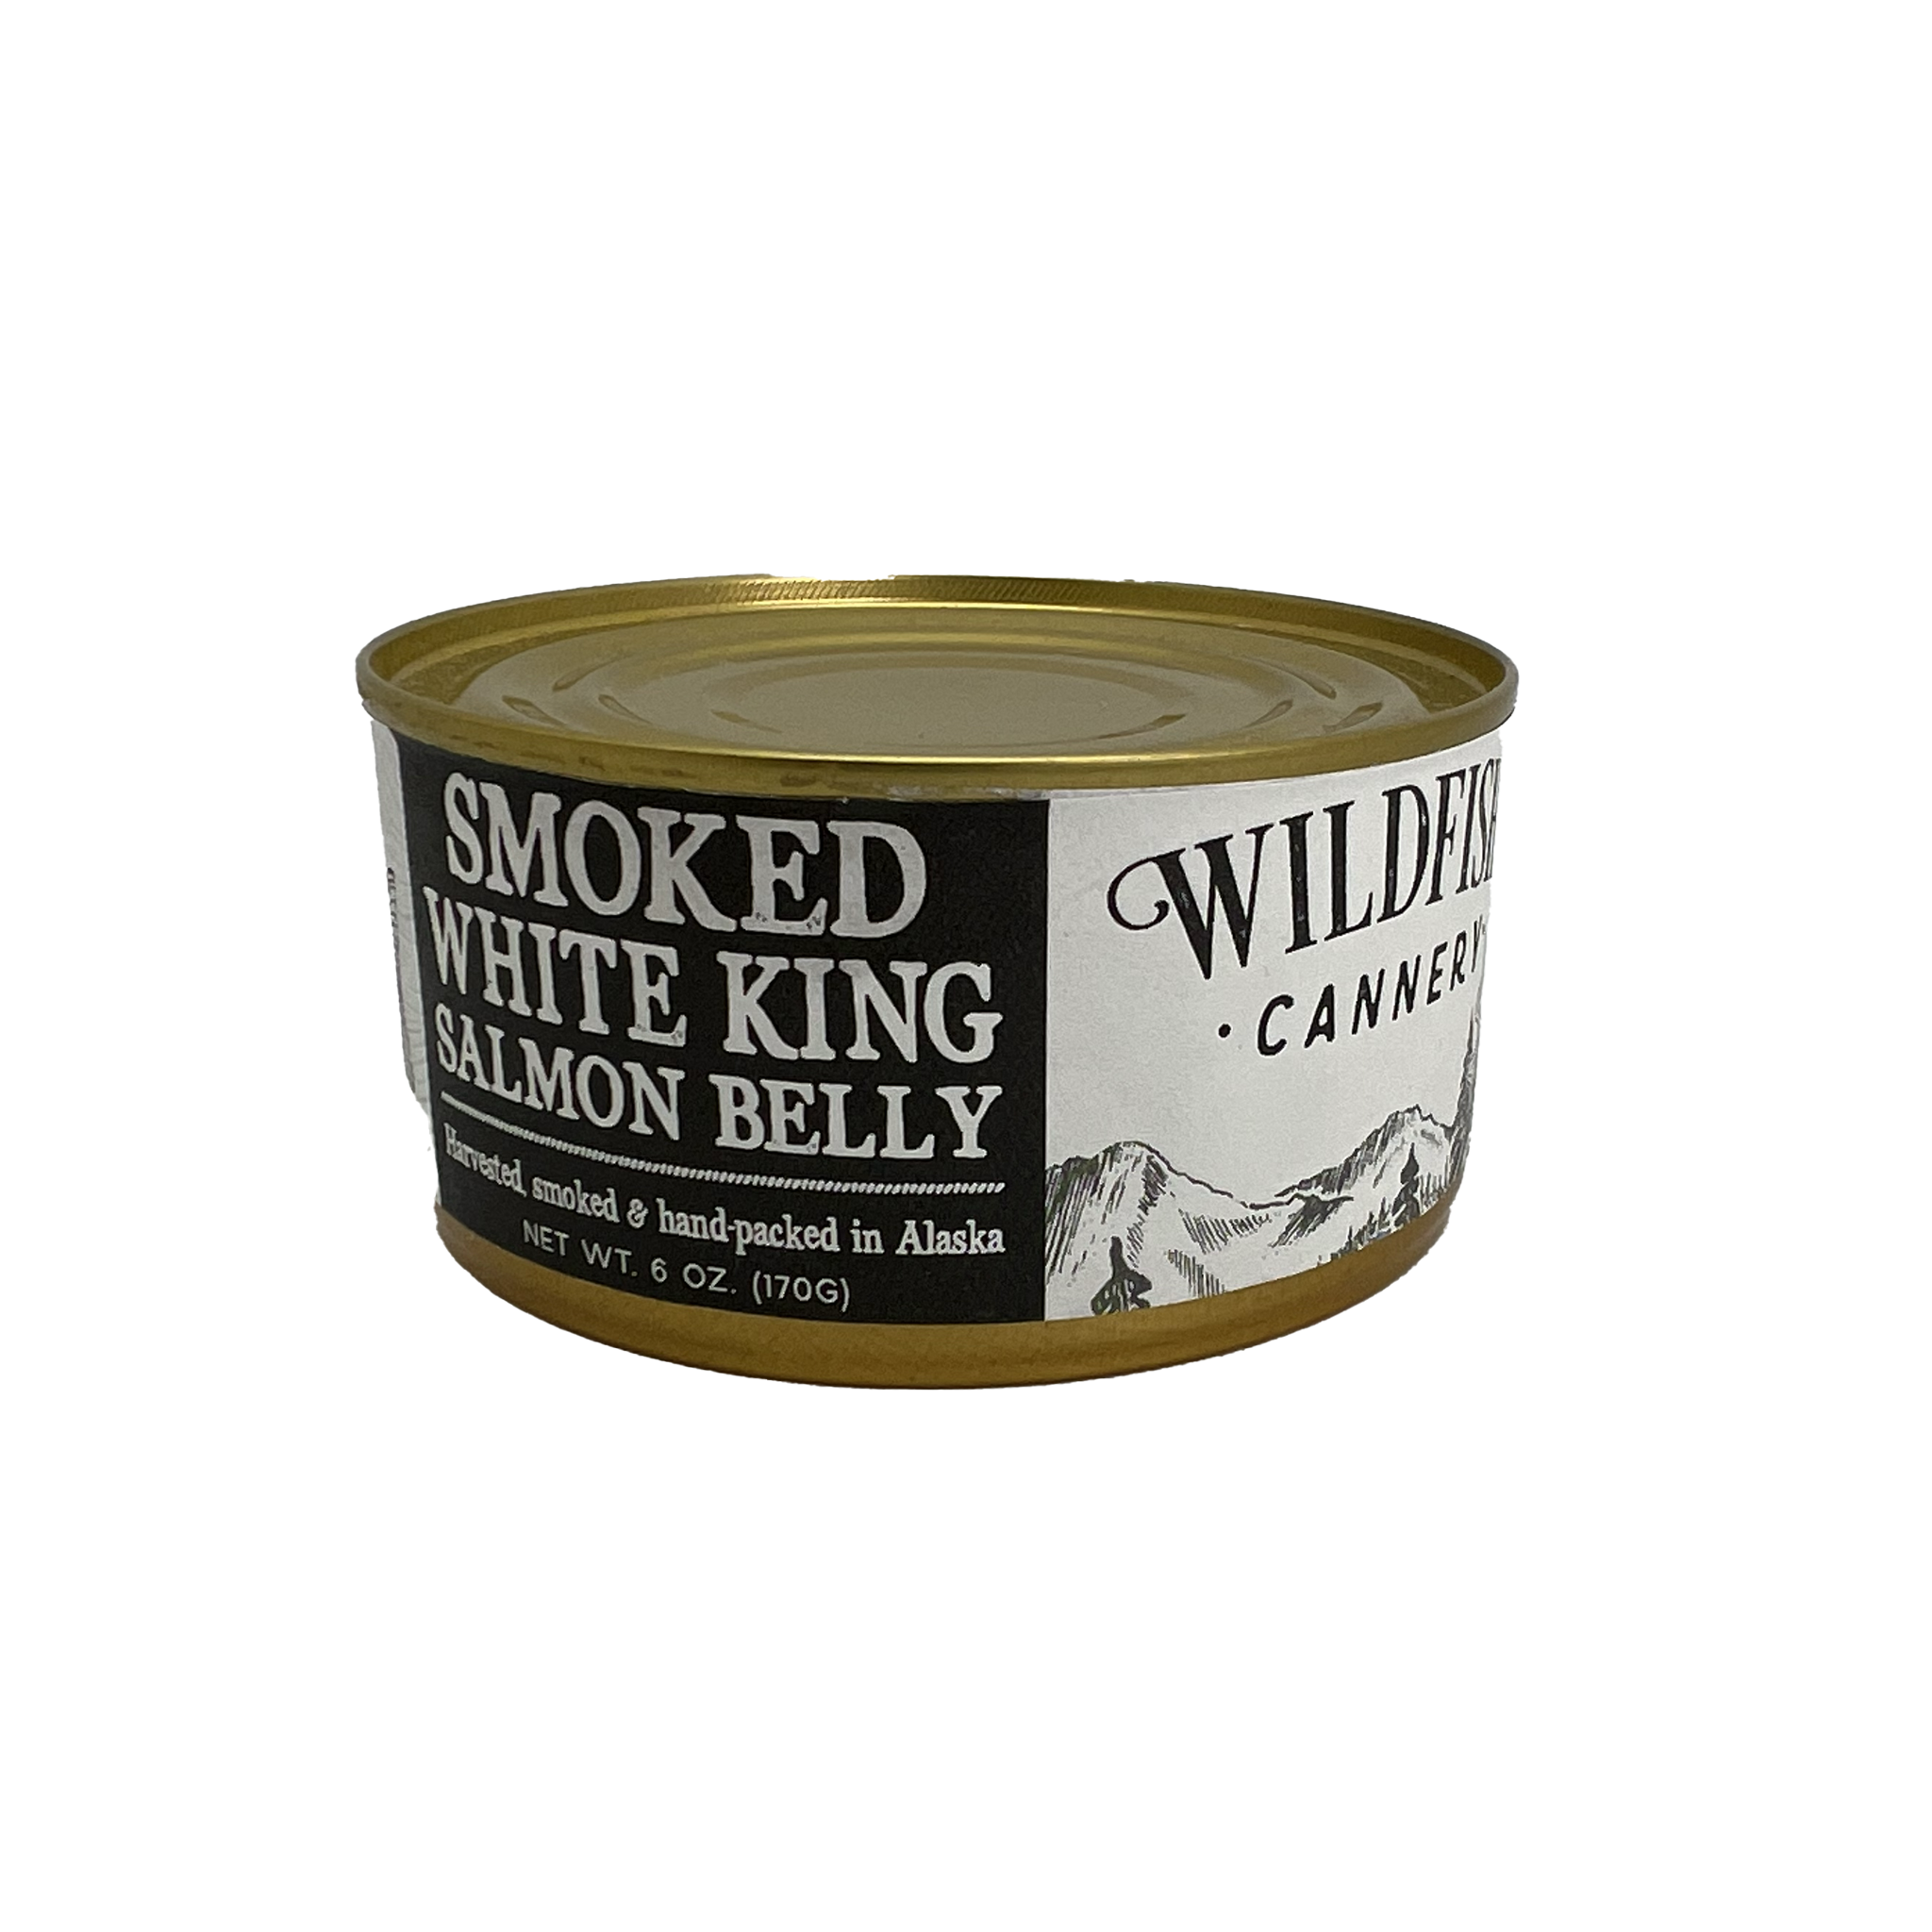 Buy Smoked Alaskan King Salmon Belly